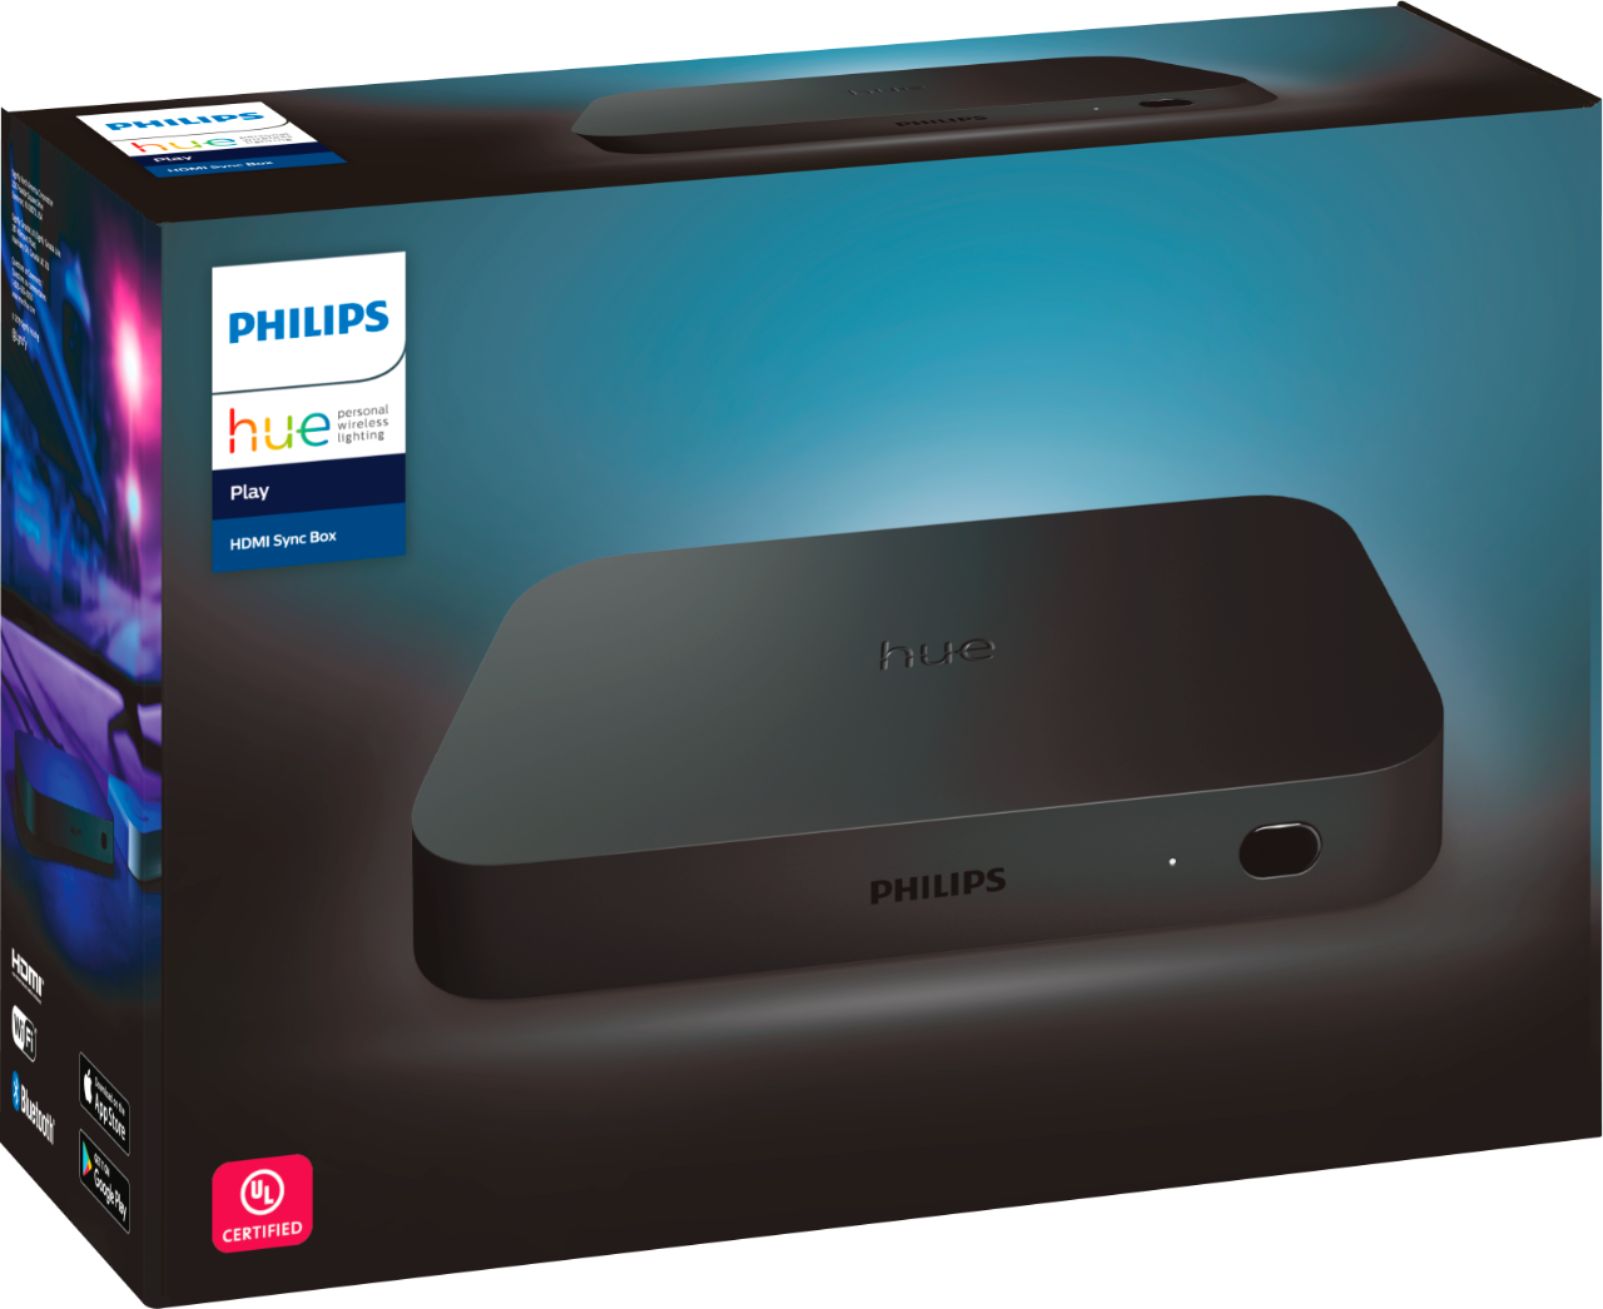 Philips Hue HDMI Sync Box Review